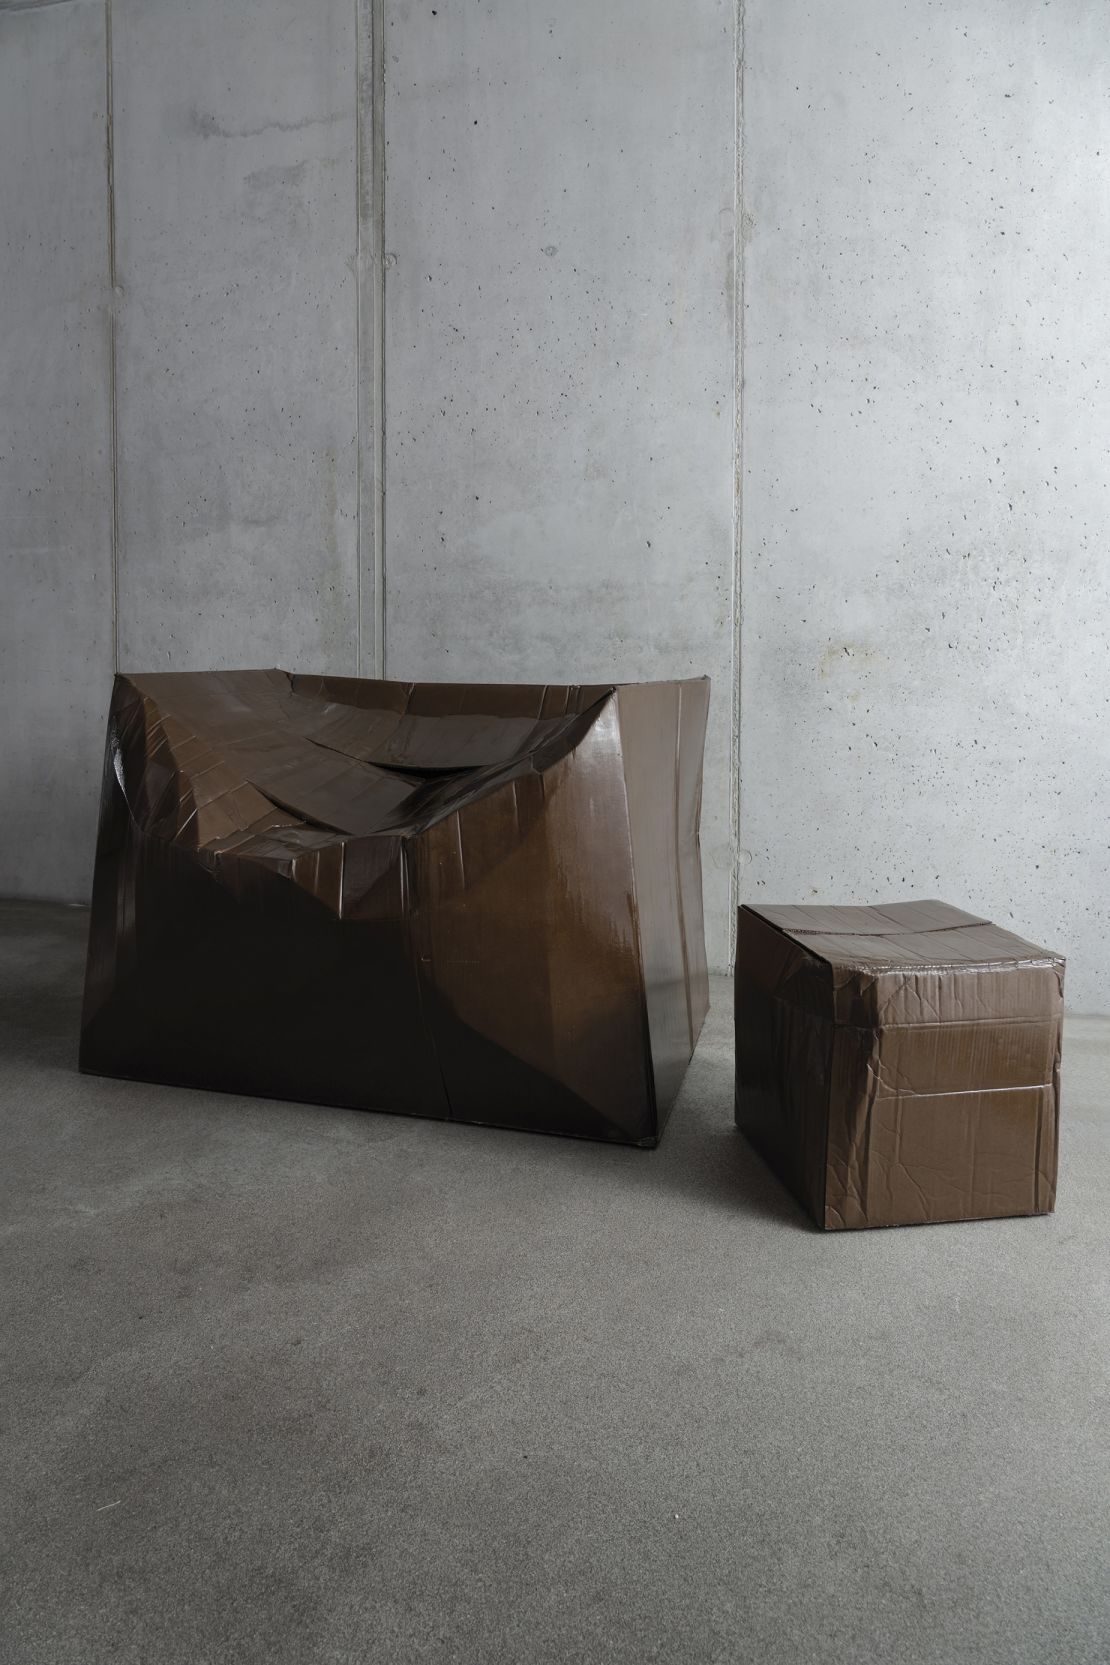 Illya Goldman Gubin strengthens misshapen cardboard boxes using resin and fiberglass.